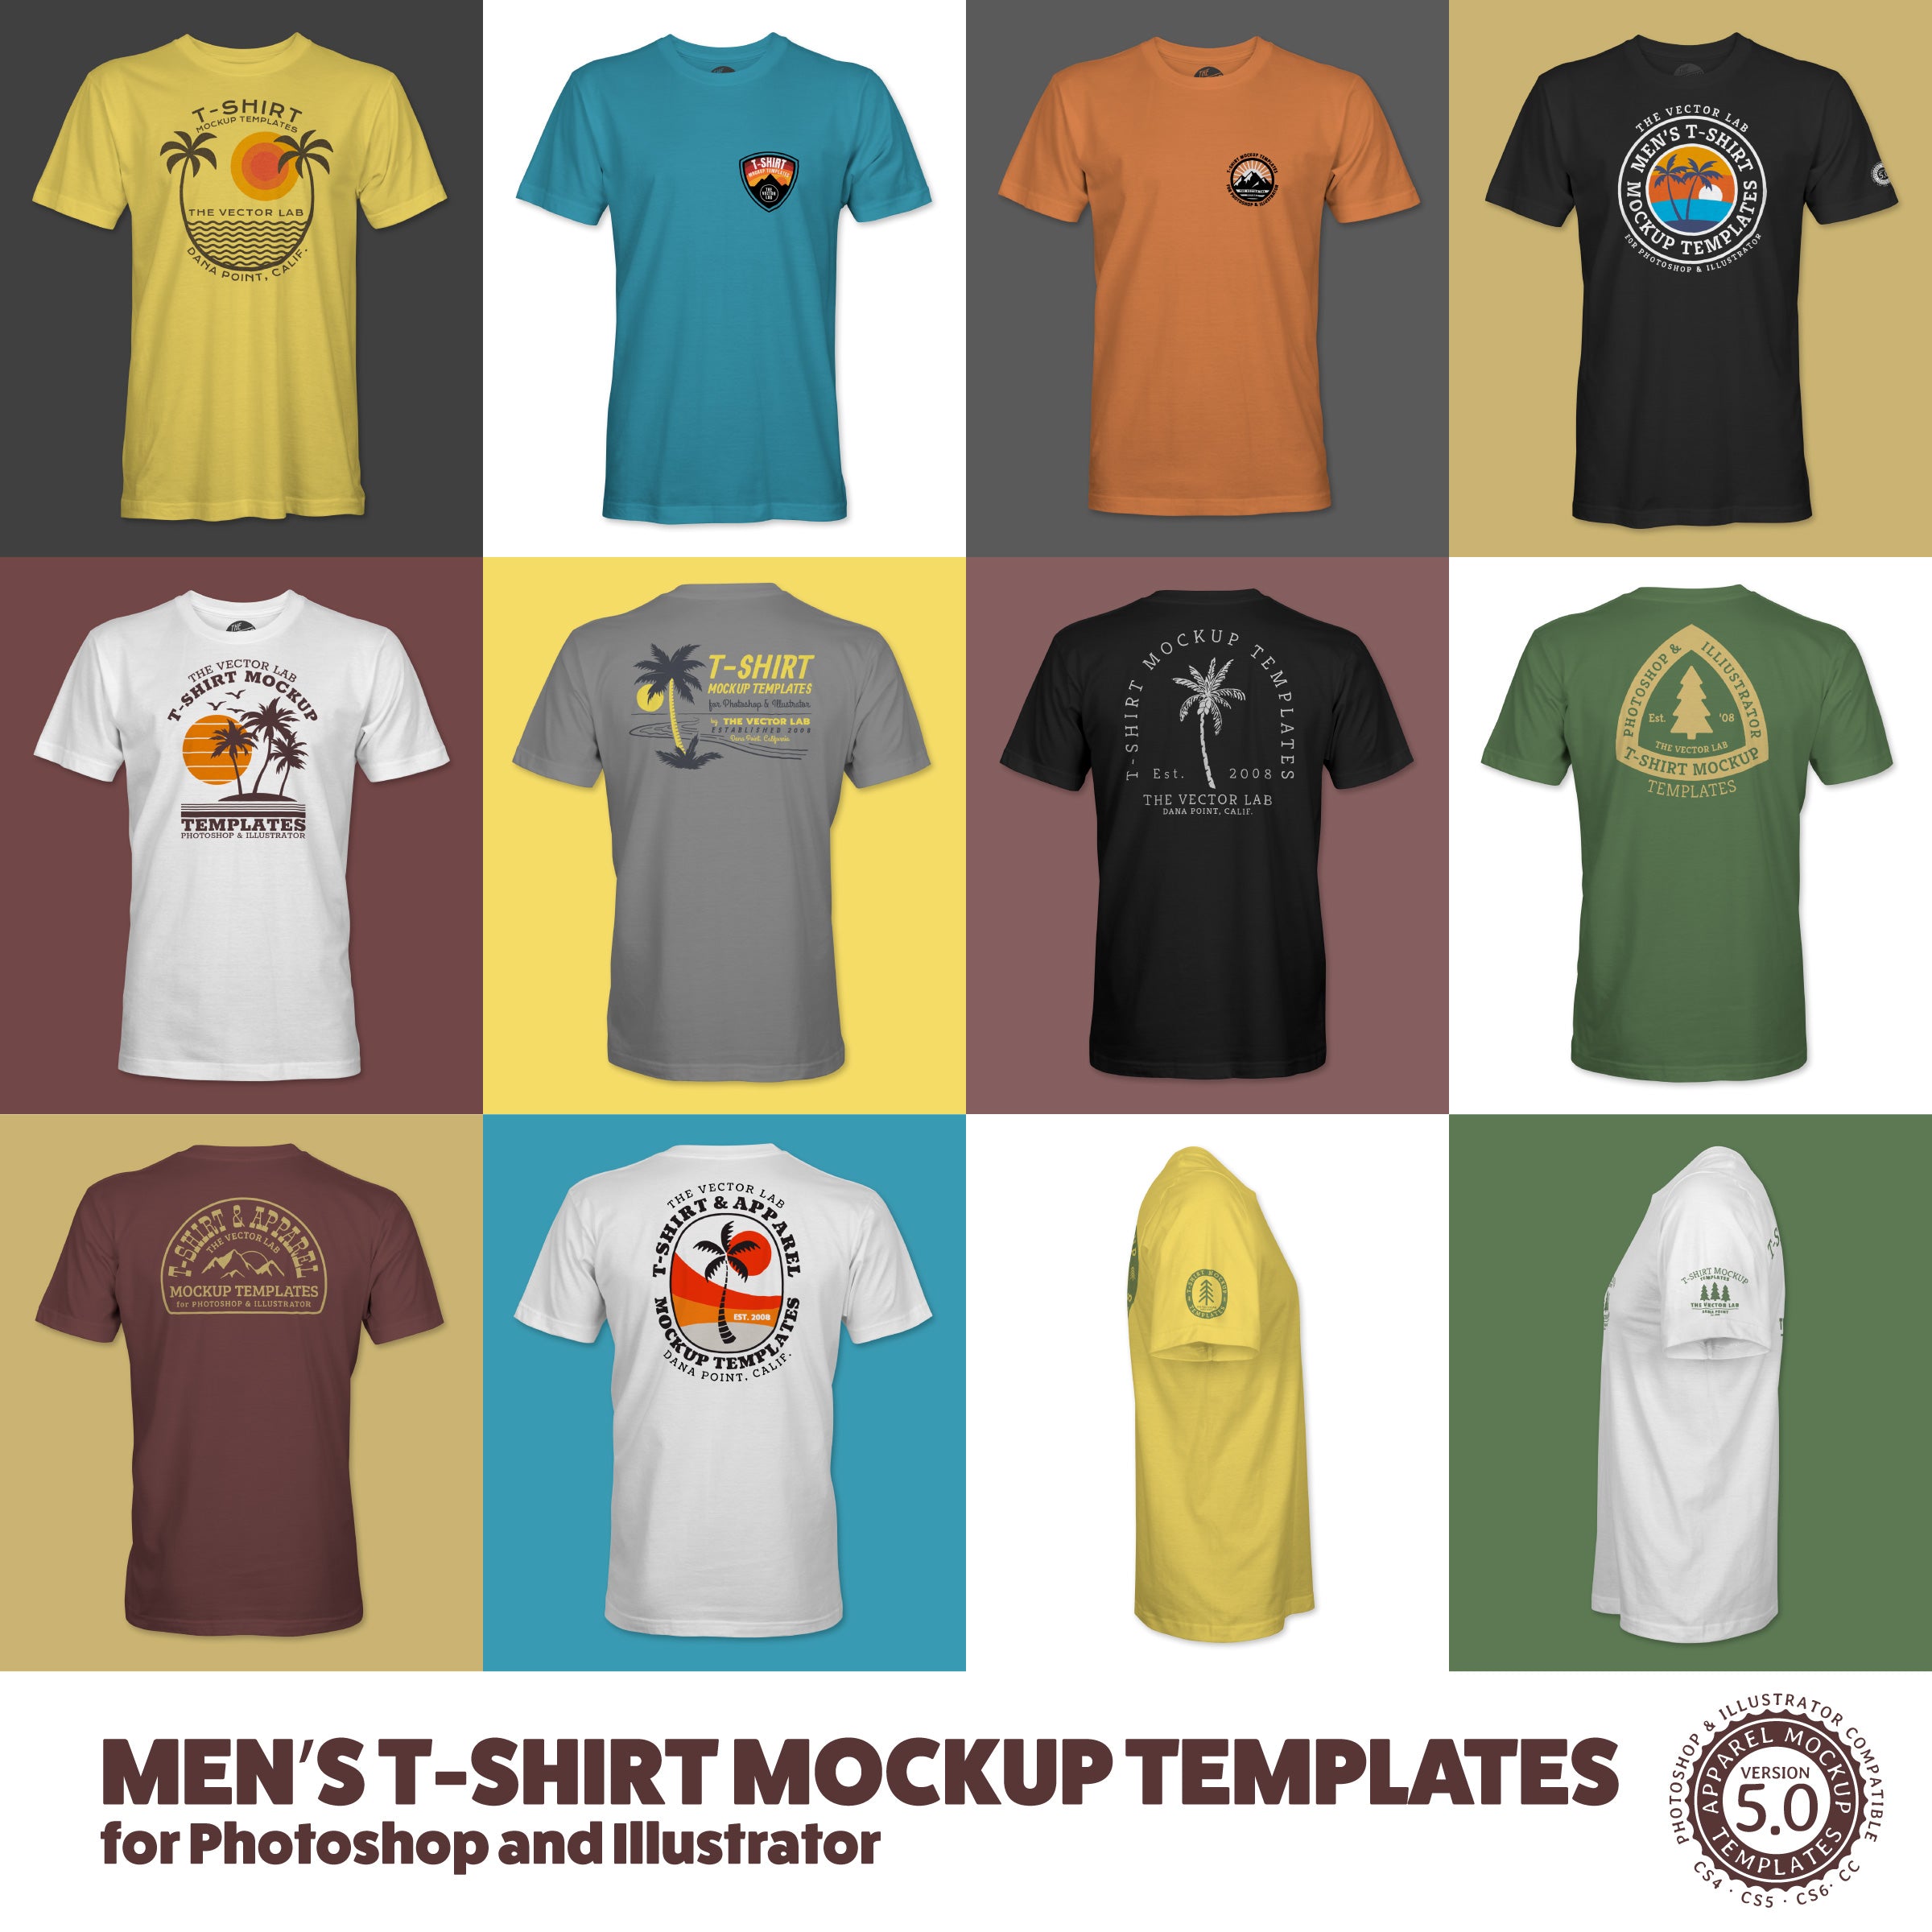 Men's T-Shirt Mockup Templates #01 - TheVectorLab